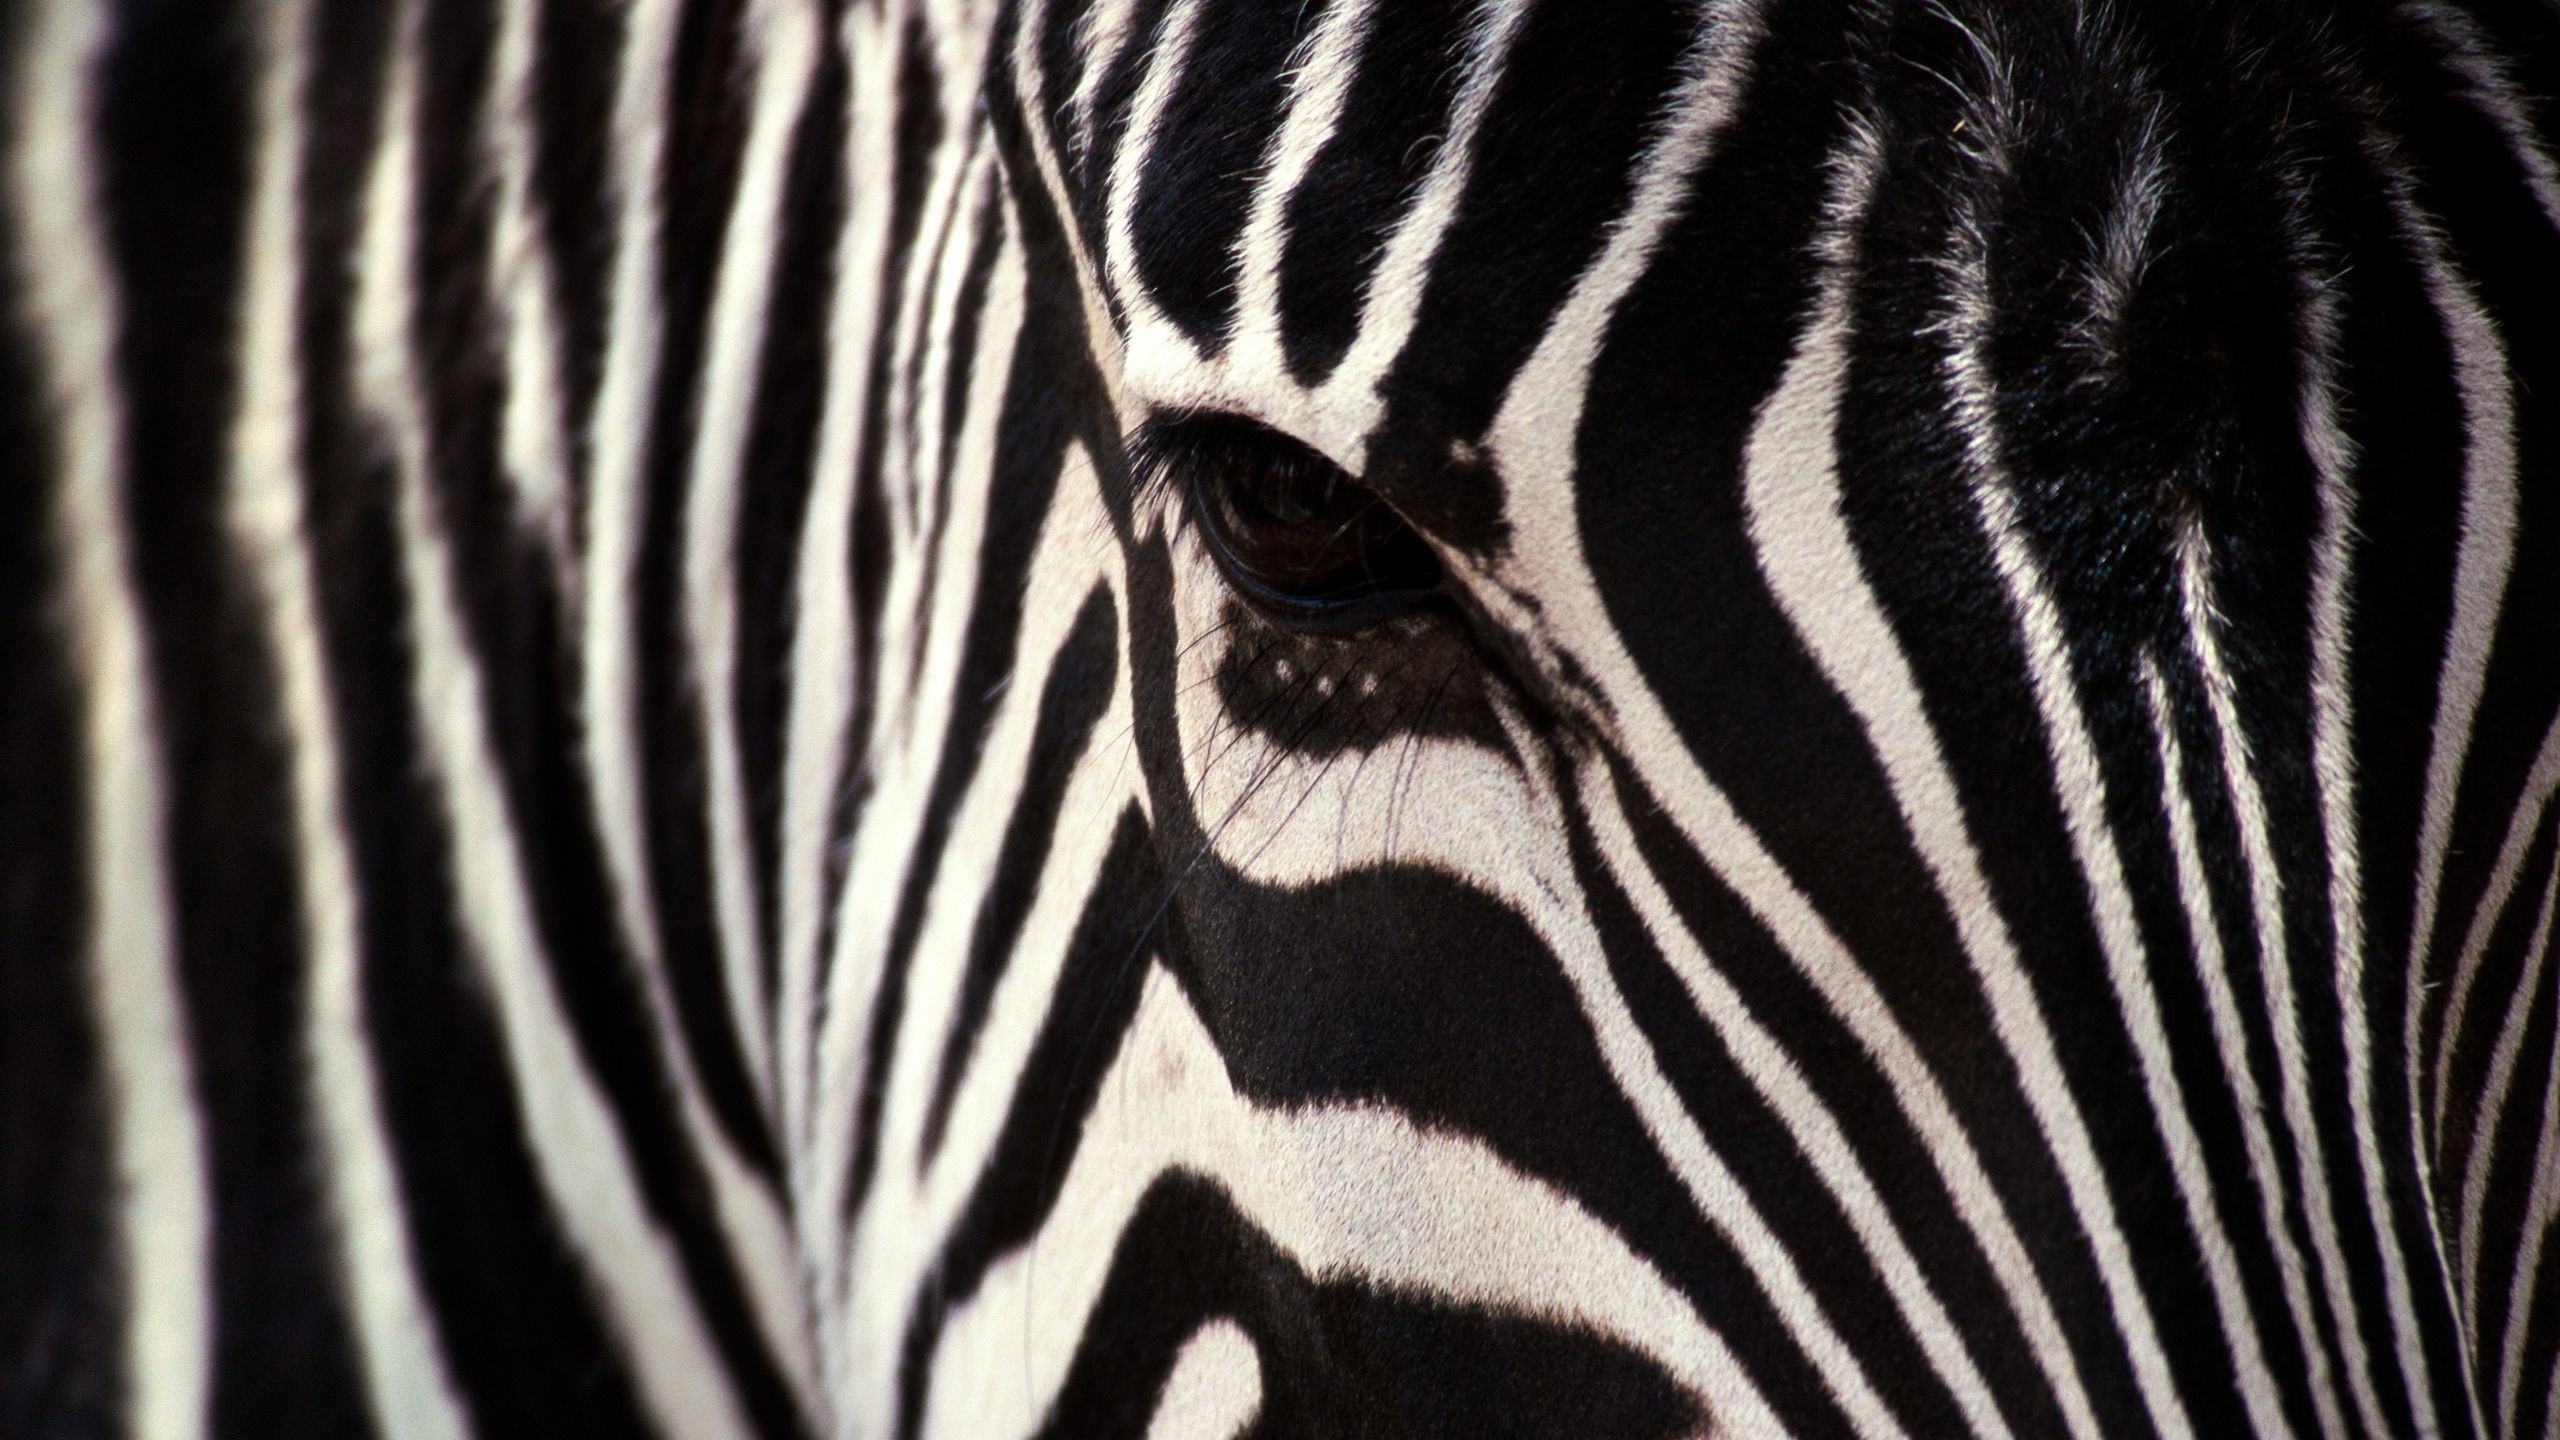 Zebra Side Fac HD Wallpaper, imágenes de fondo